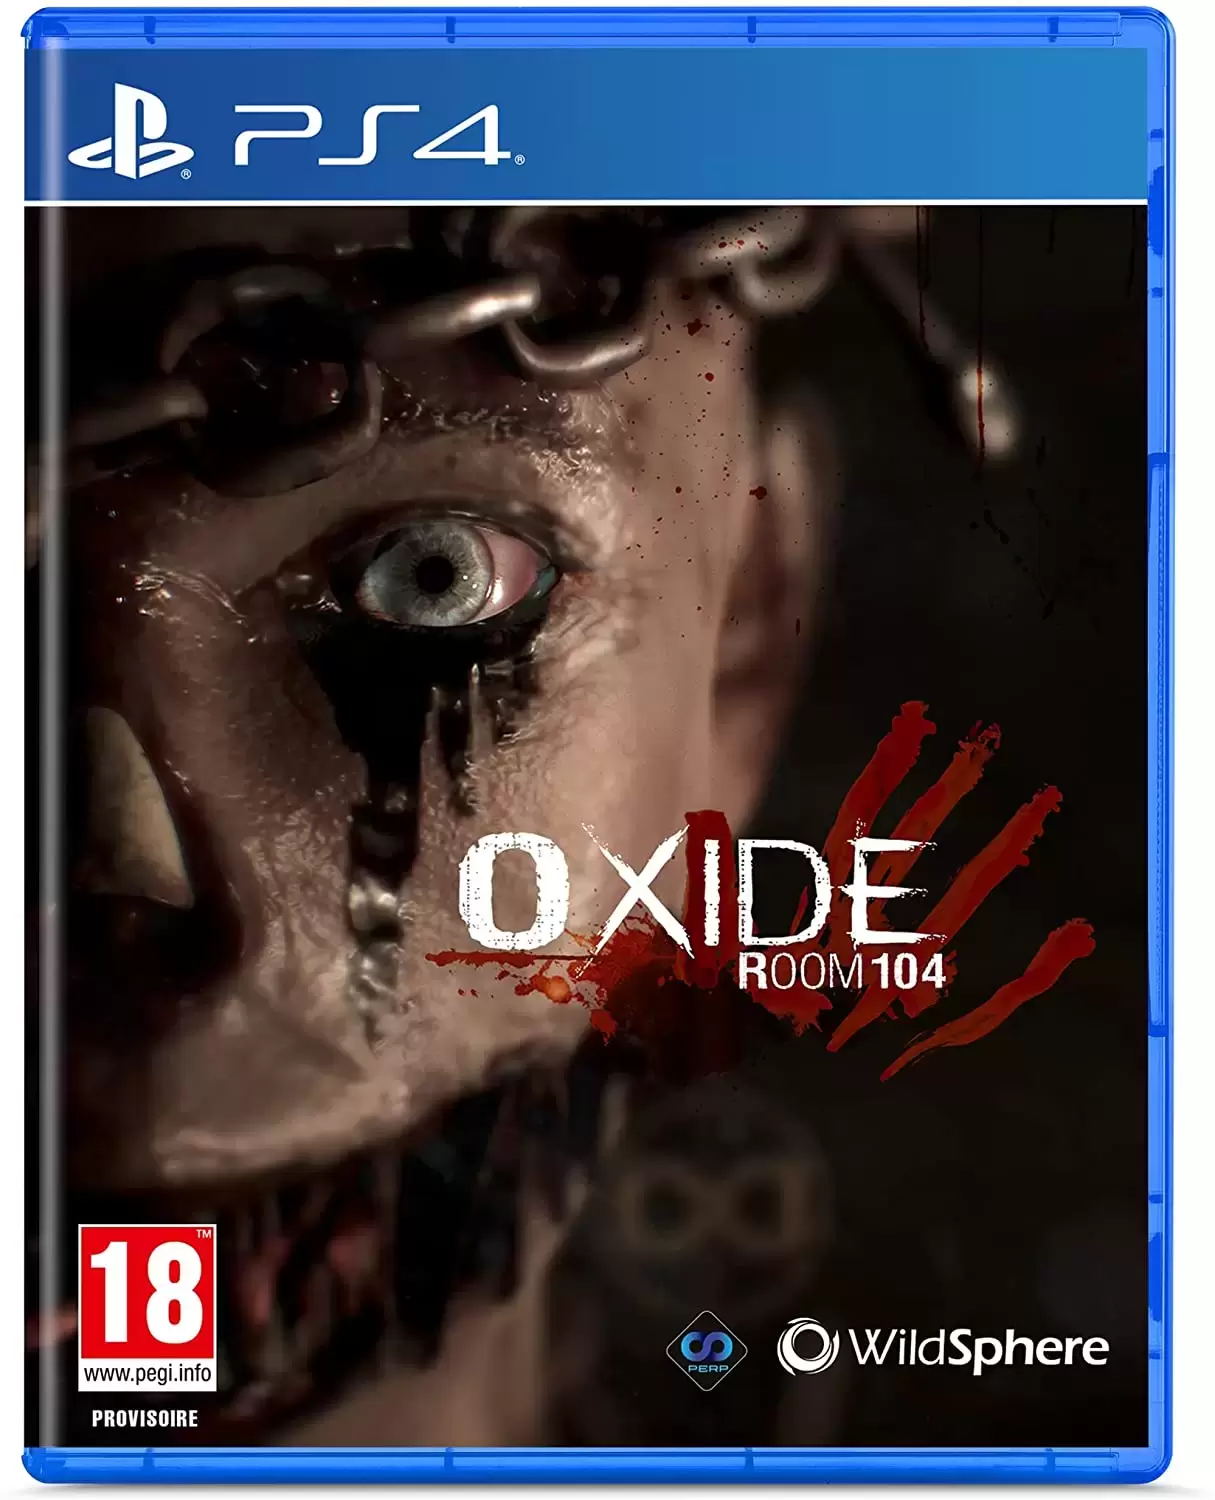 PS4 Games - Oxide Room 104